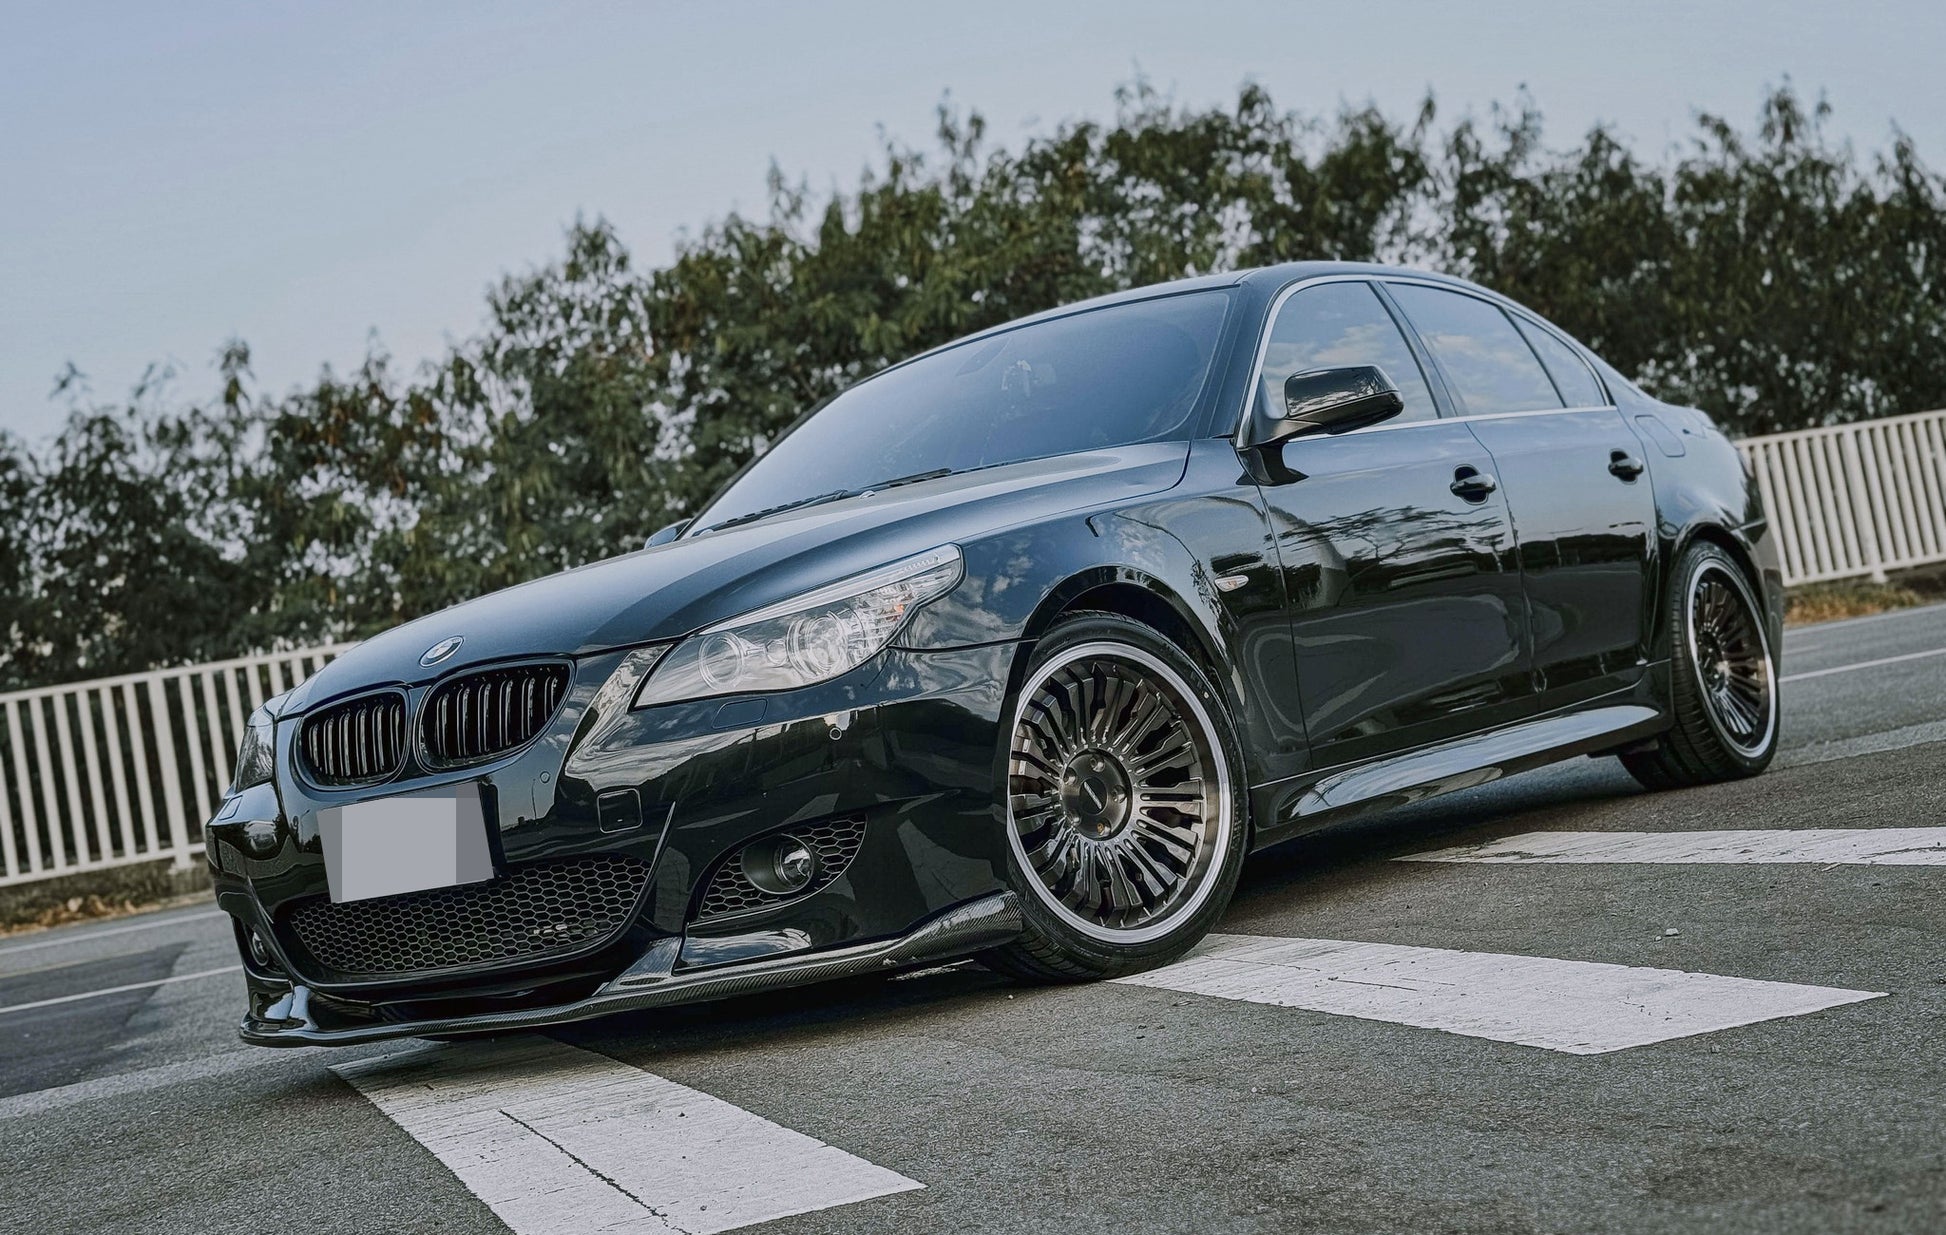 BMW E60 M5 Carbon Fiber Front Spoiler – JL Motoring